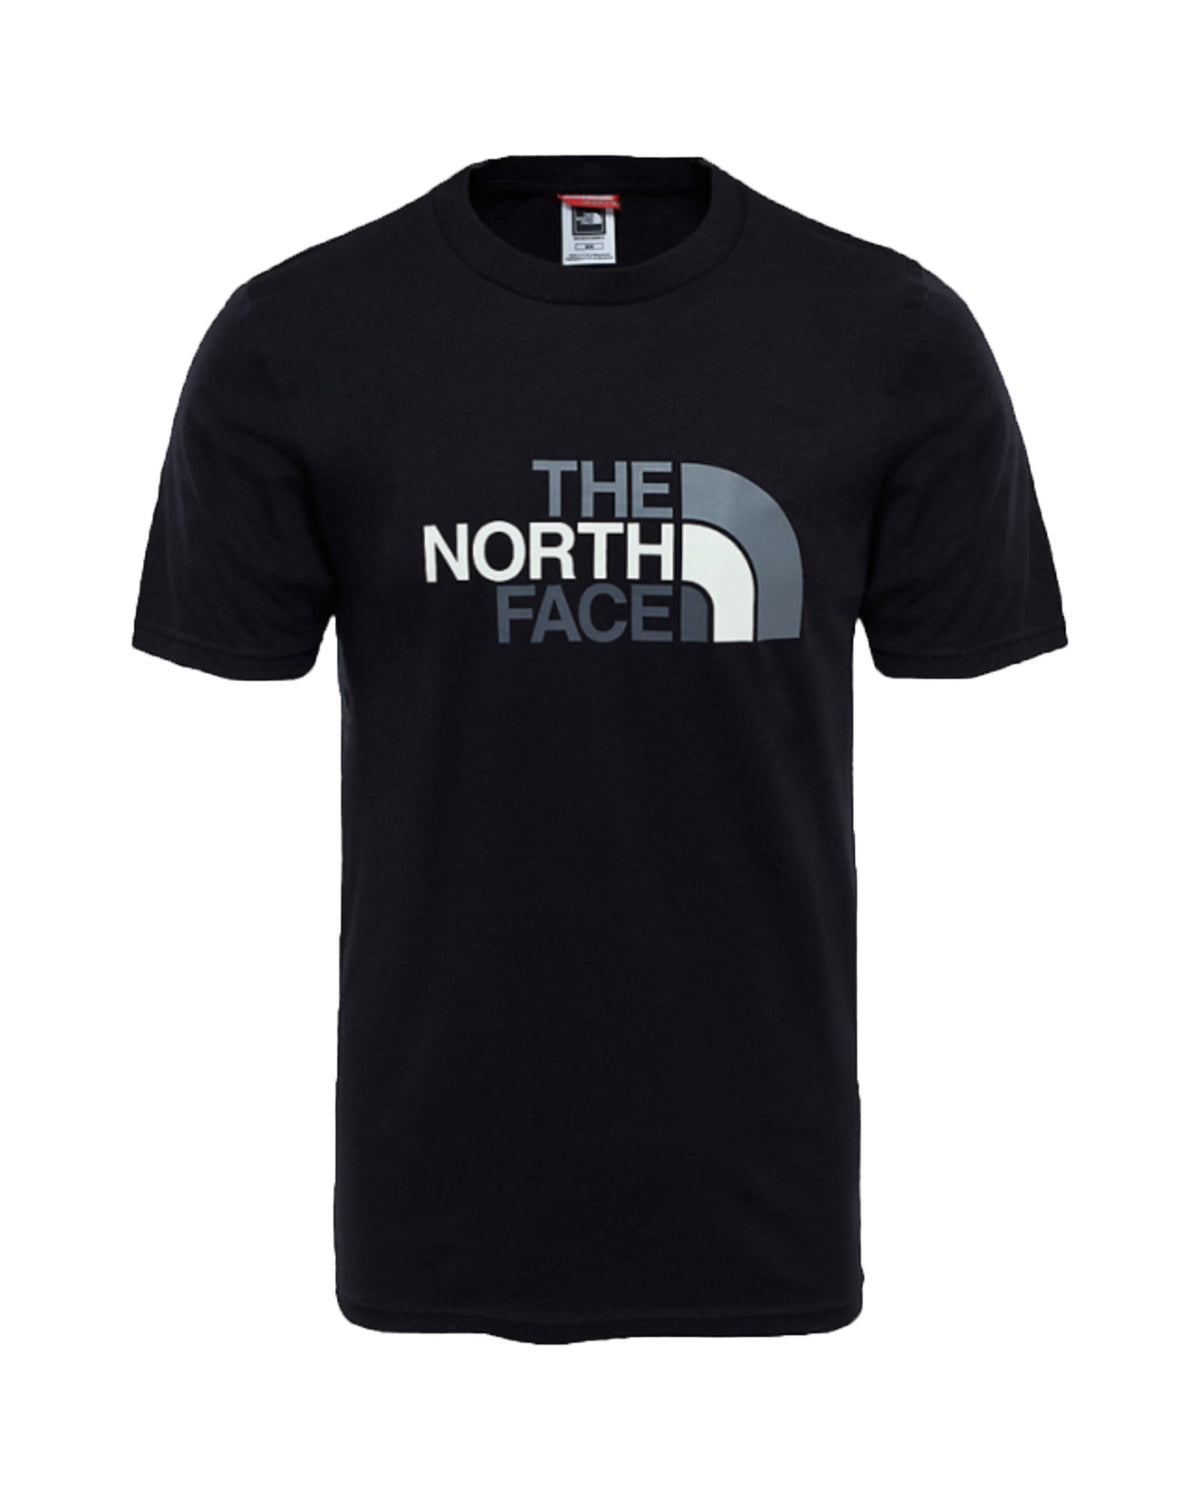 T-Shirt Uomo The North Face Big Logo Nero